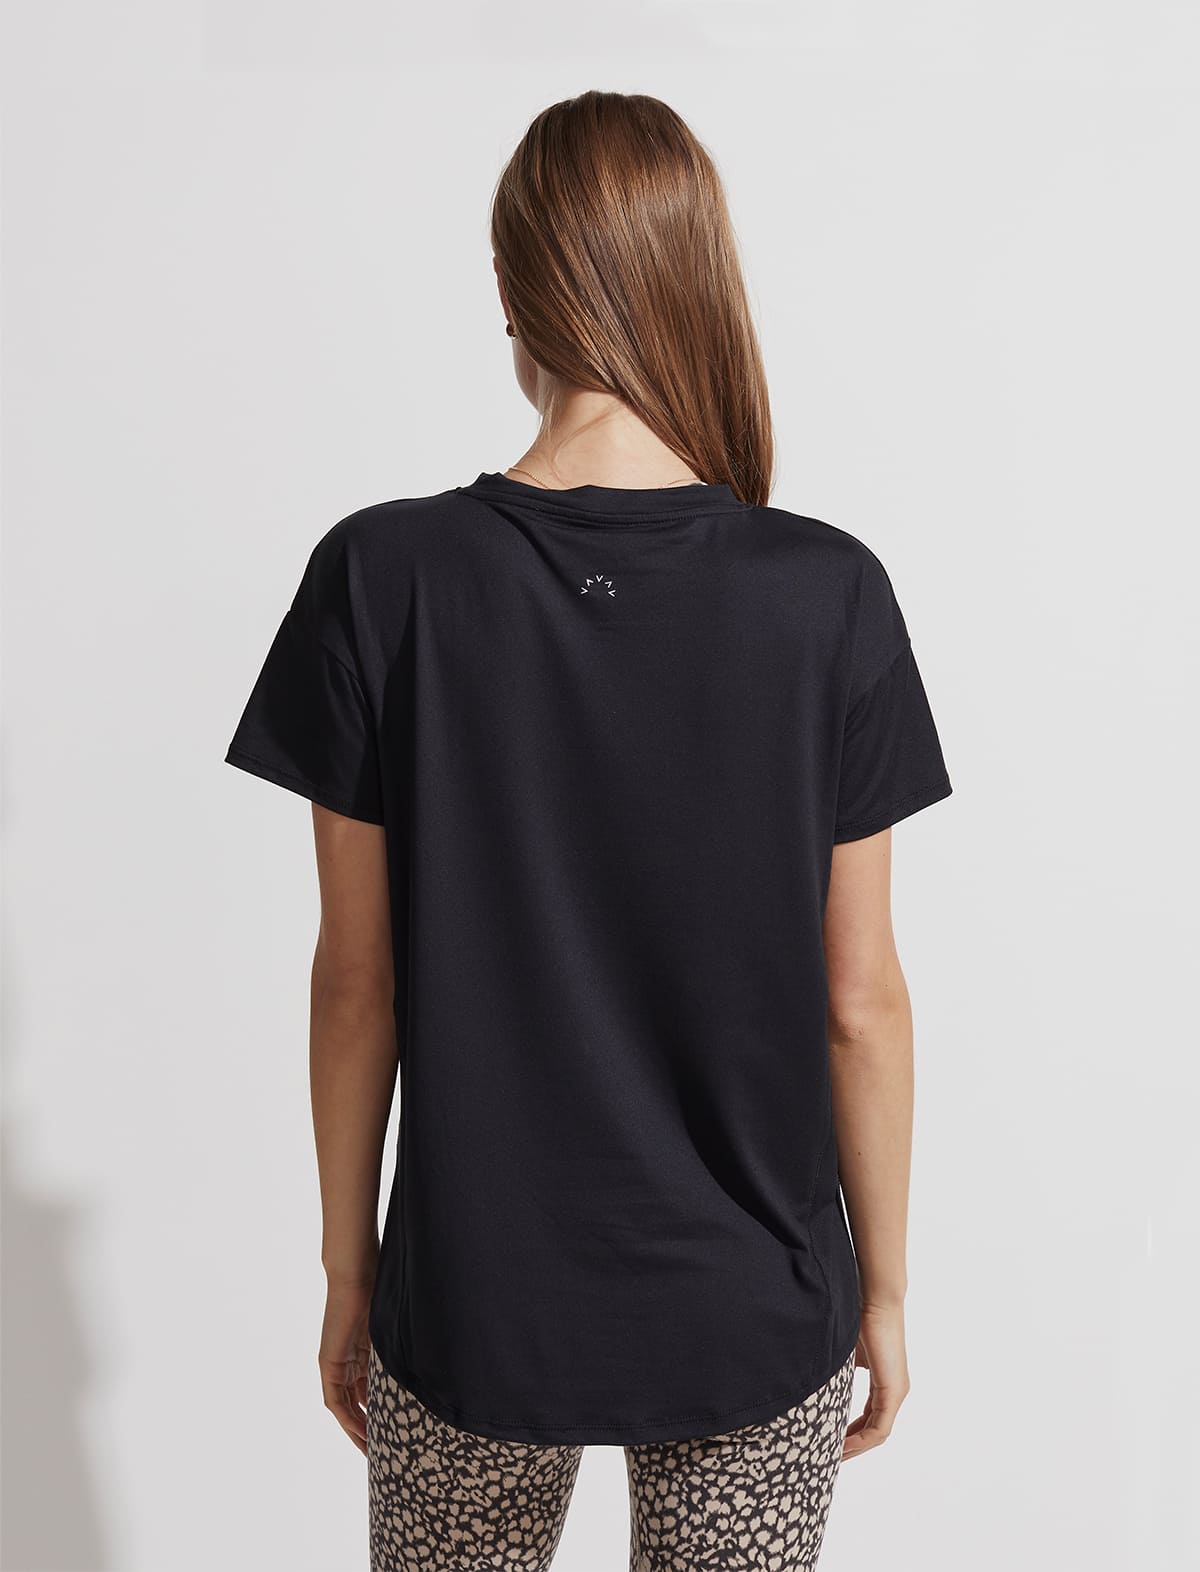 VARLEY Wright T-Shirt in Black